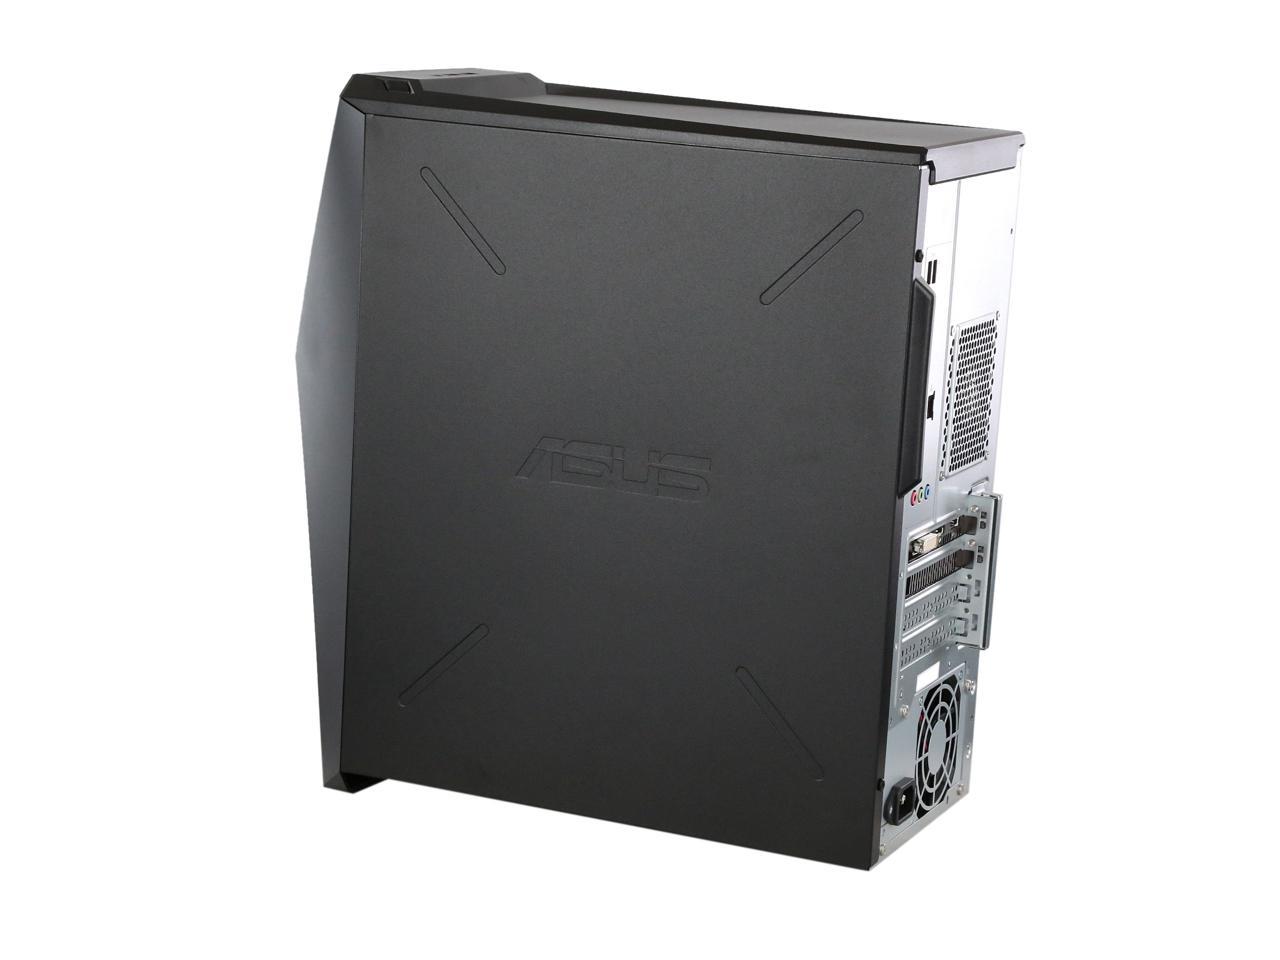 Asus Desktop Computer Gl10cs Ds751 Intel Core I7 8th Gen 8700 320ghz